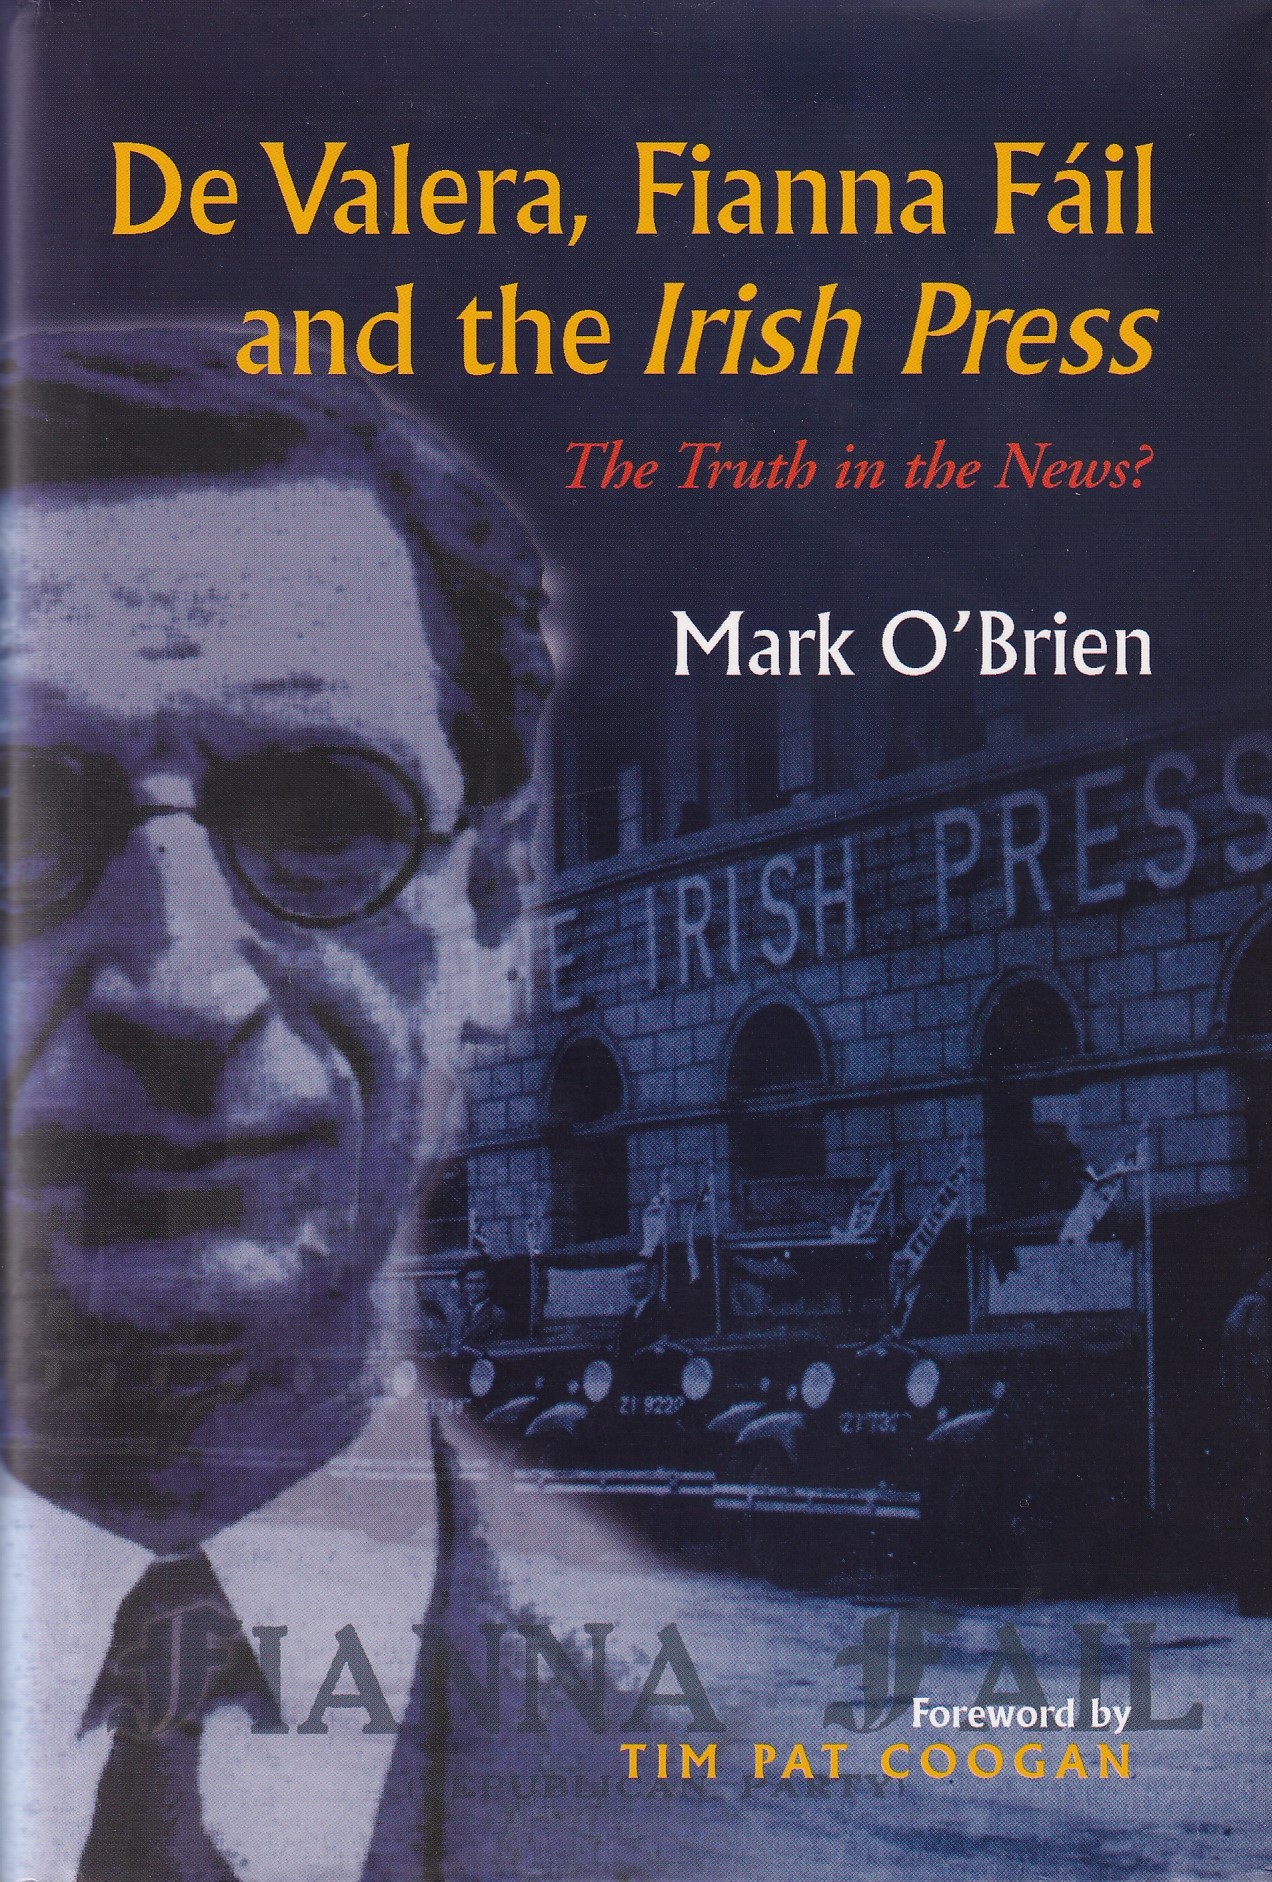 De Valera, Fianna Fail and the “Irish Press”: The Truth in the News? | Mark O'Brien | Charlie Byrne's